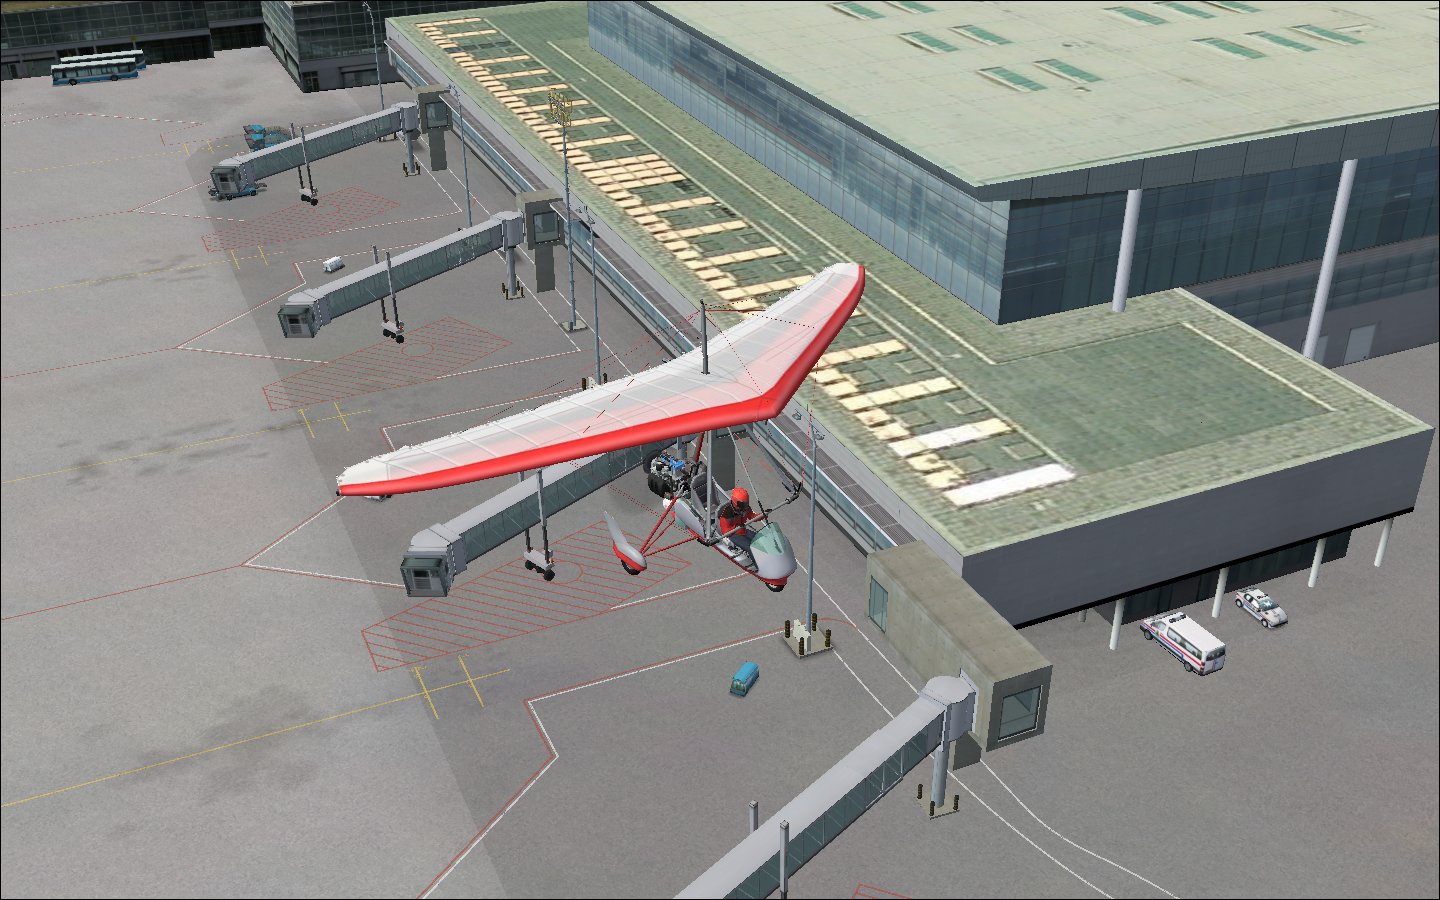 fs9 aerosoft luxembourg airports ellxa